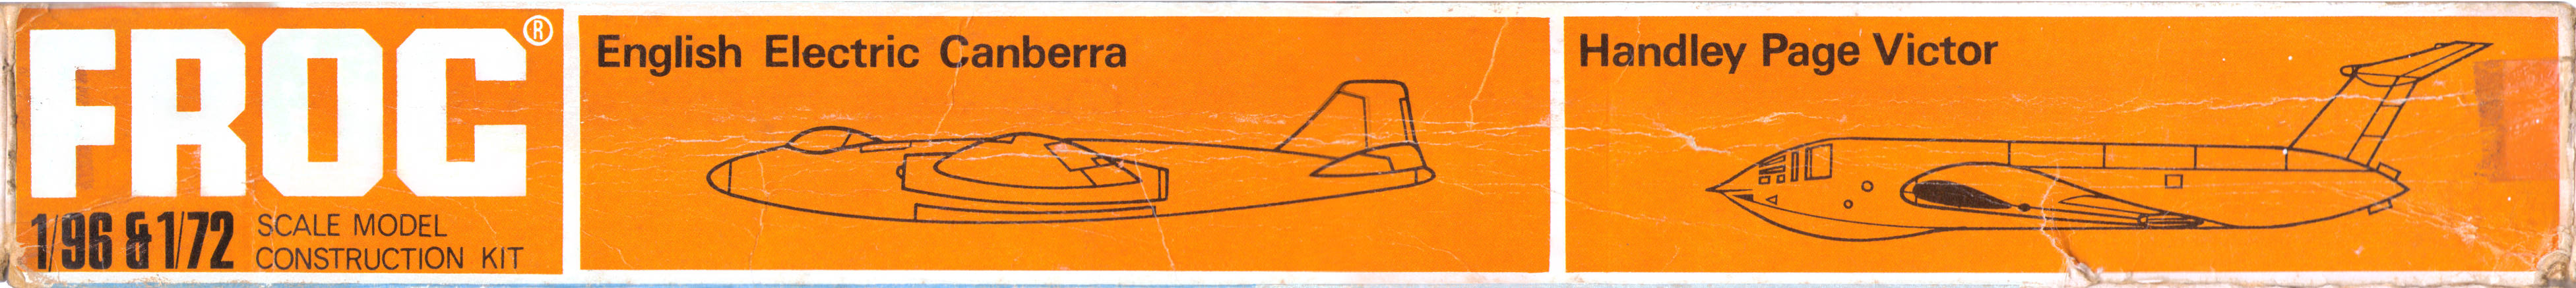 Боковая сторона коробки Tri-ang Pedigree (NZ) F353 Vickers Valiant, Tri-ang Pedigree (N.Z.) Ltd., 1969-70